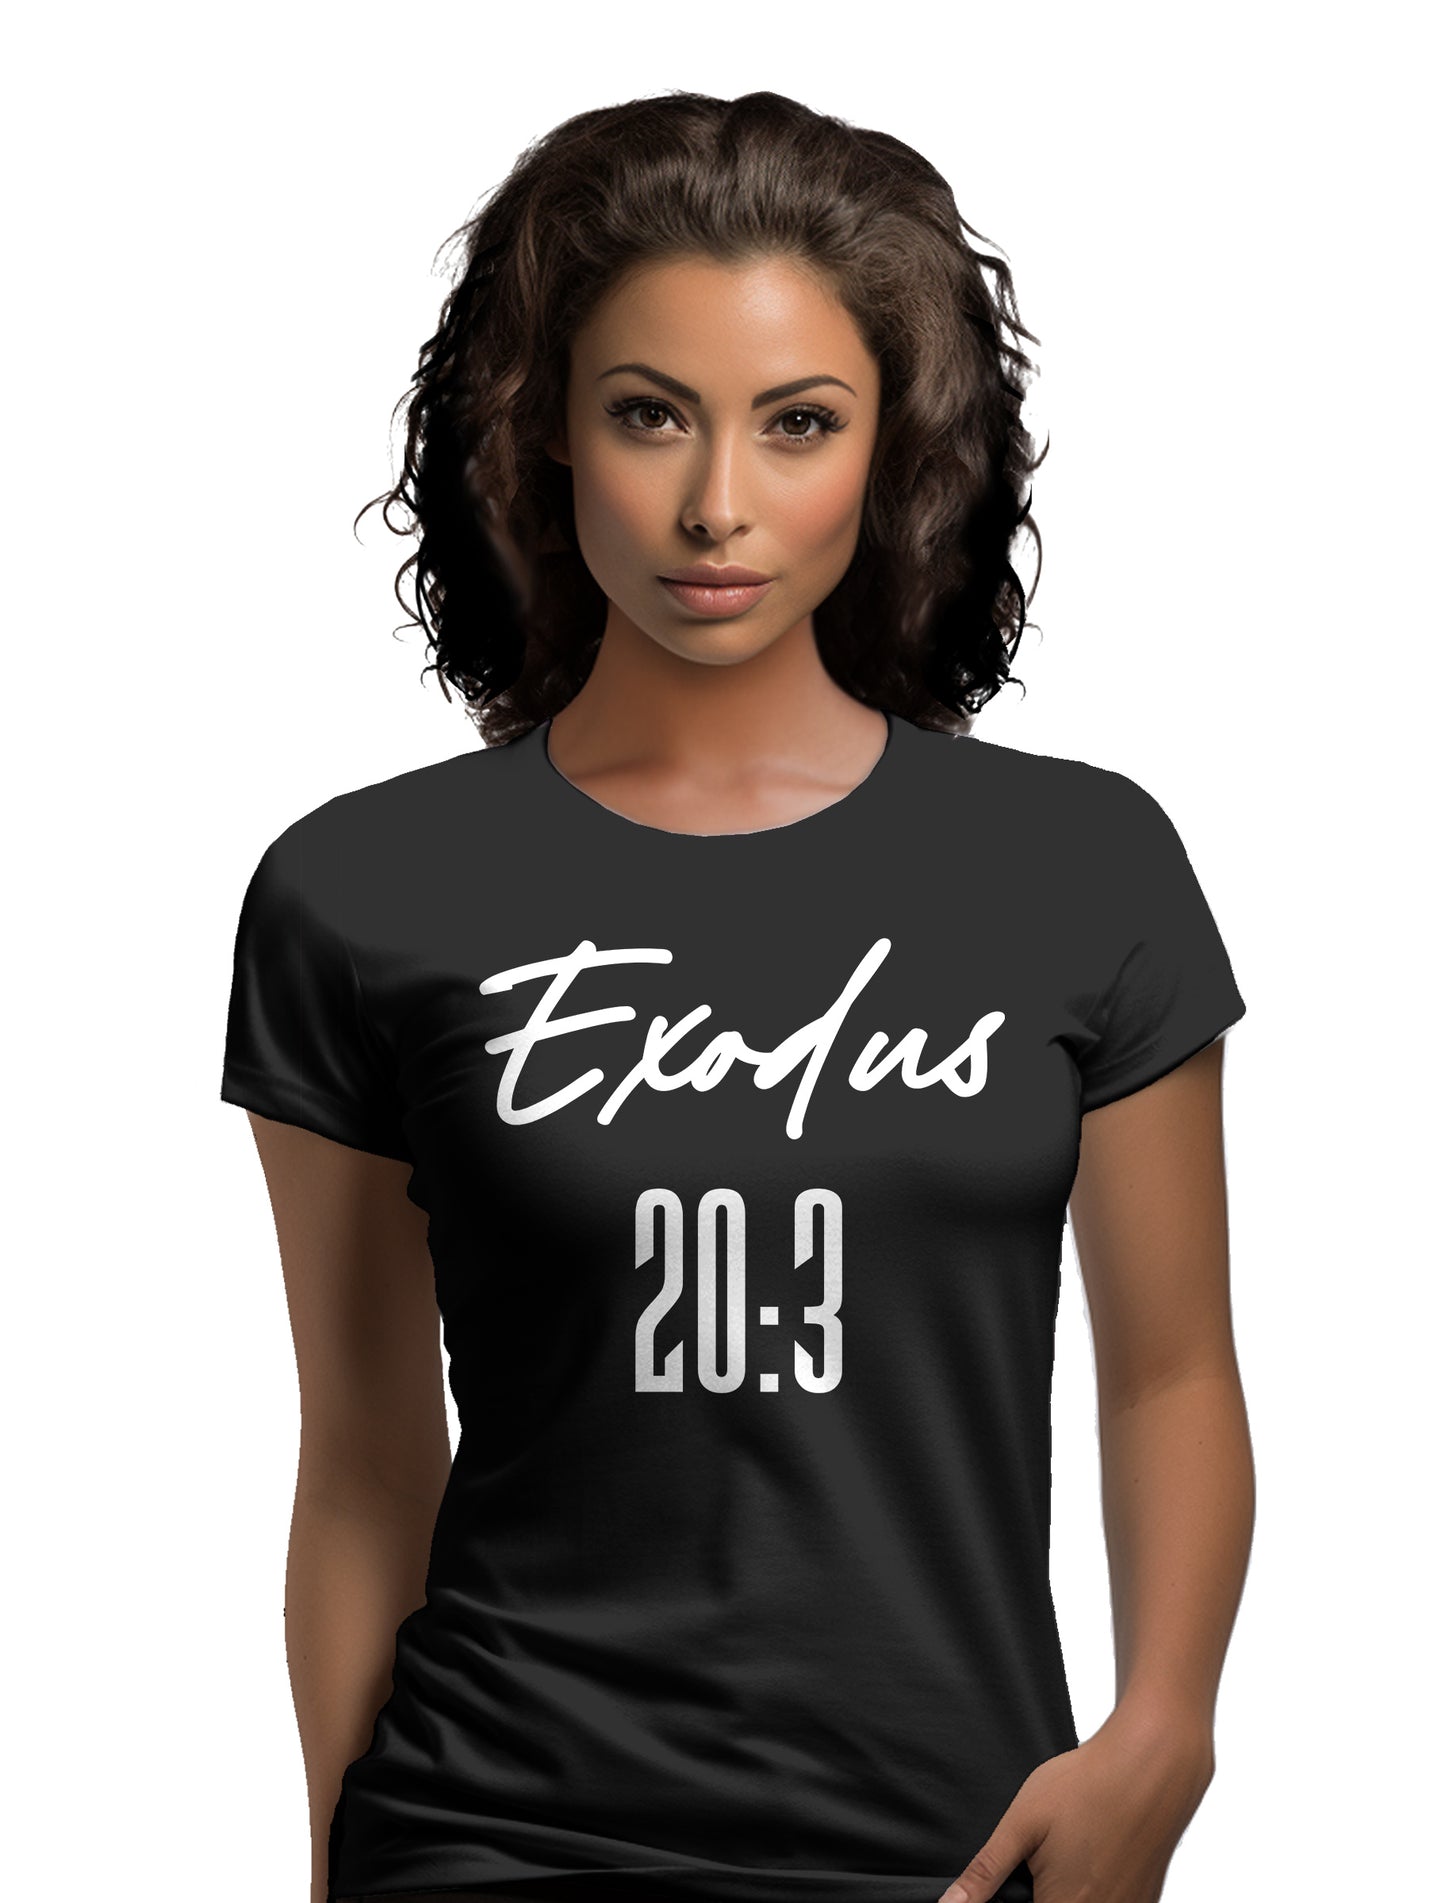 Exoodus 20:3- Women's short sleeve fitted tee